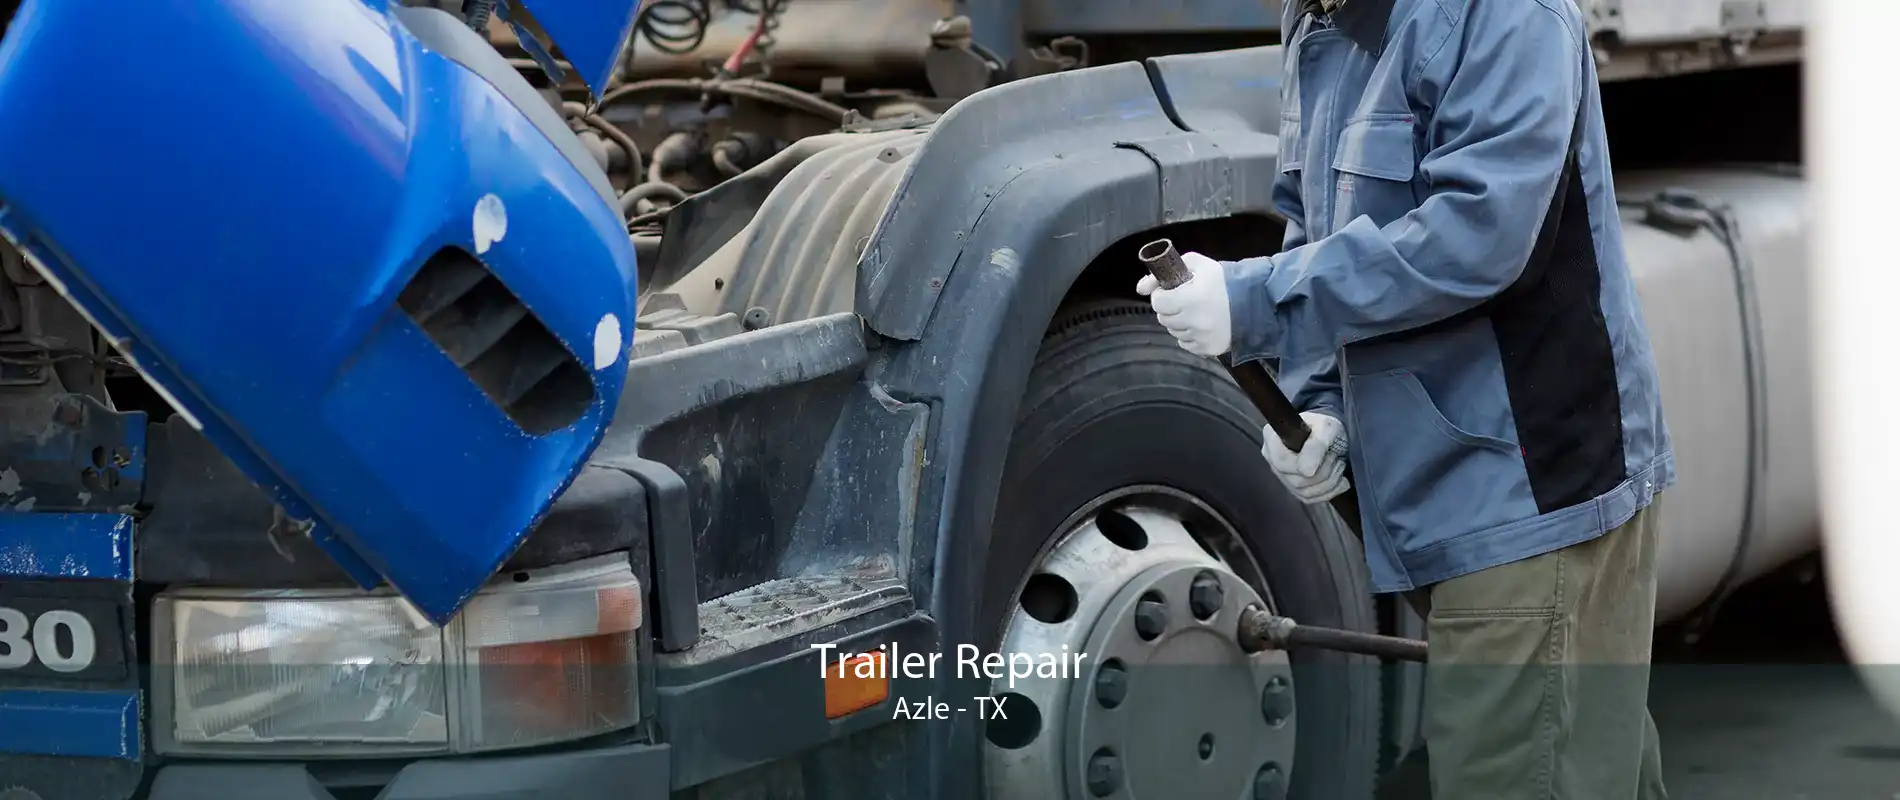 Trailer Repair Azle - TX